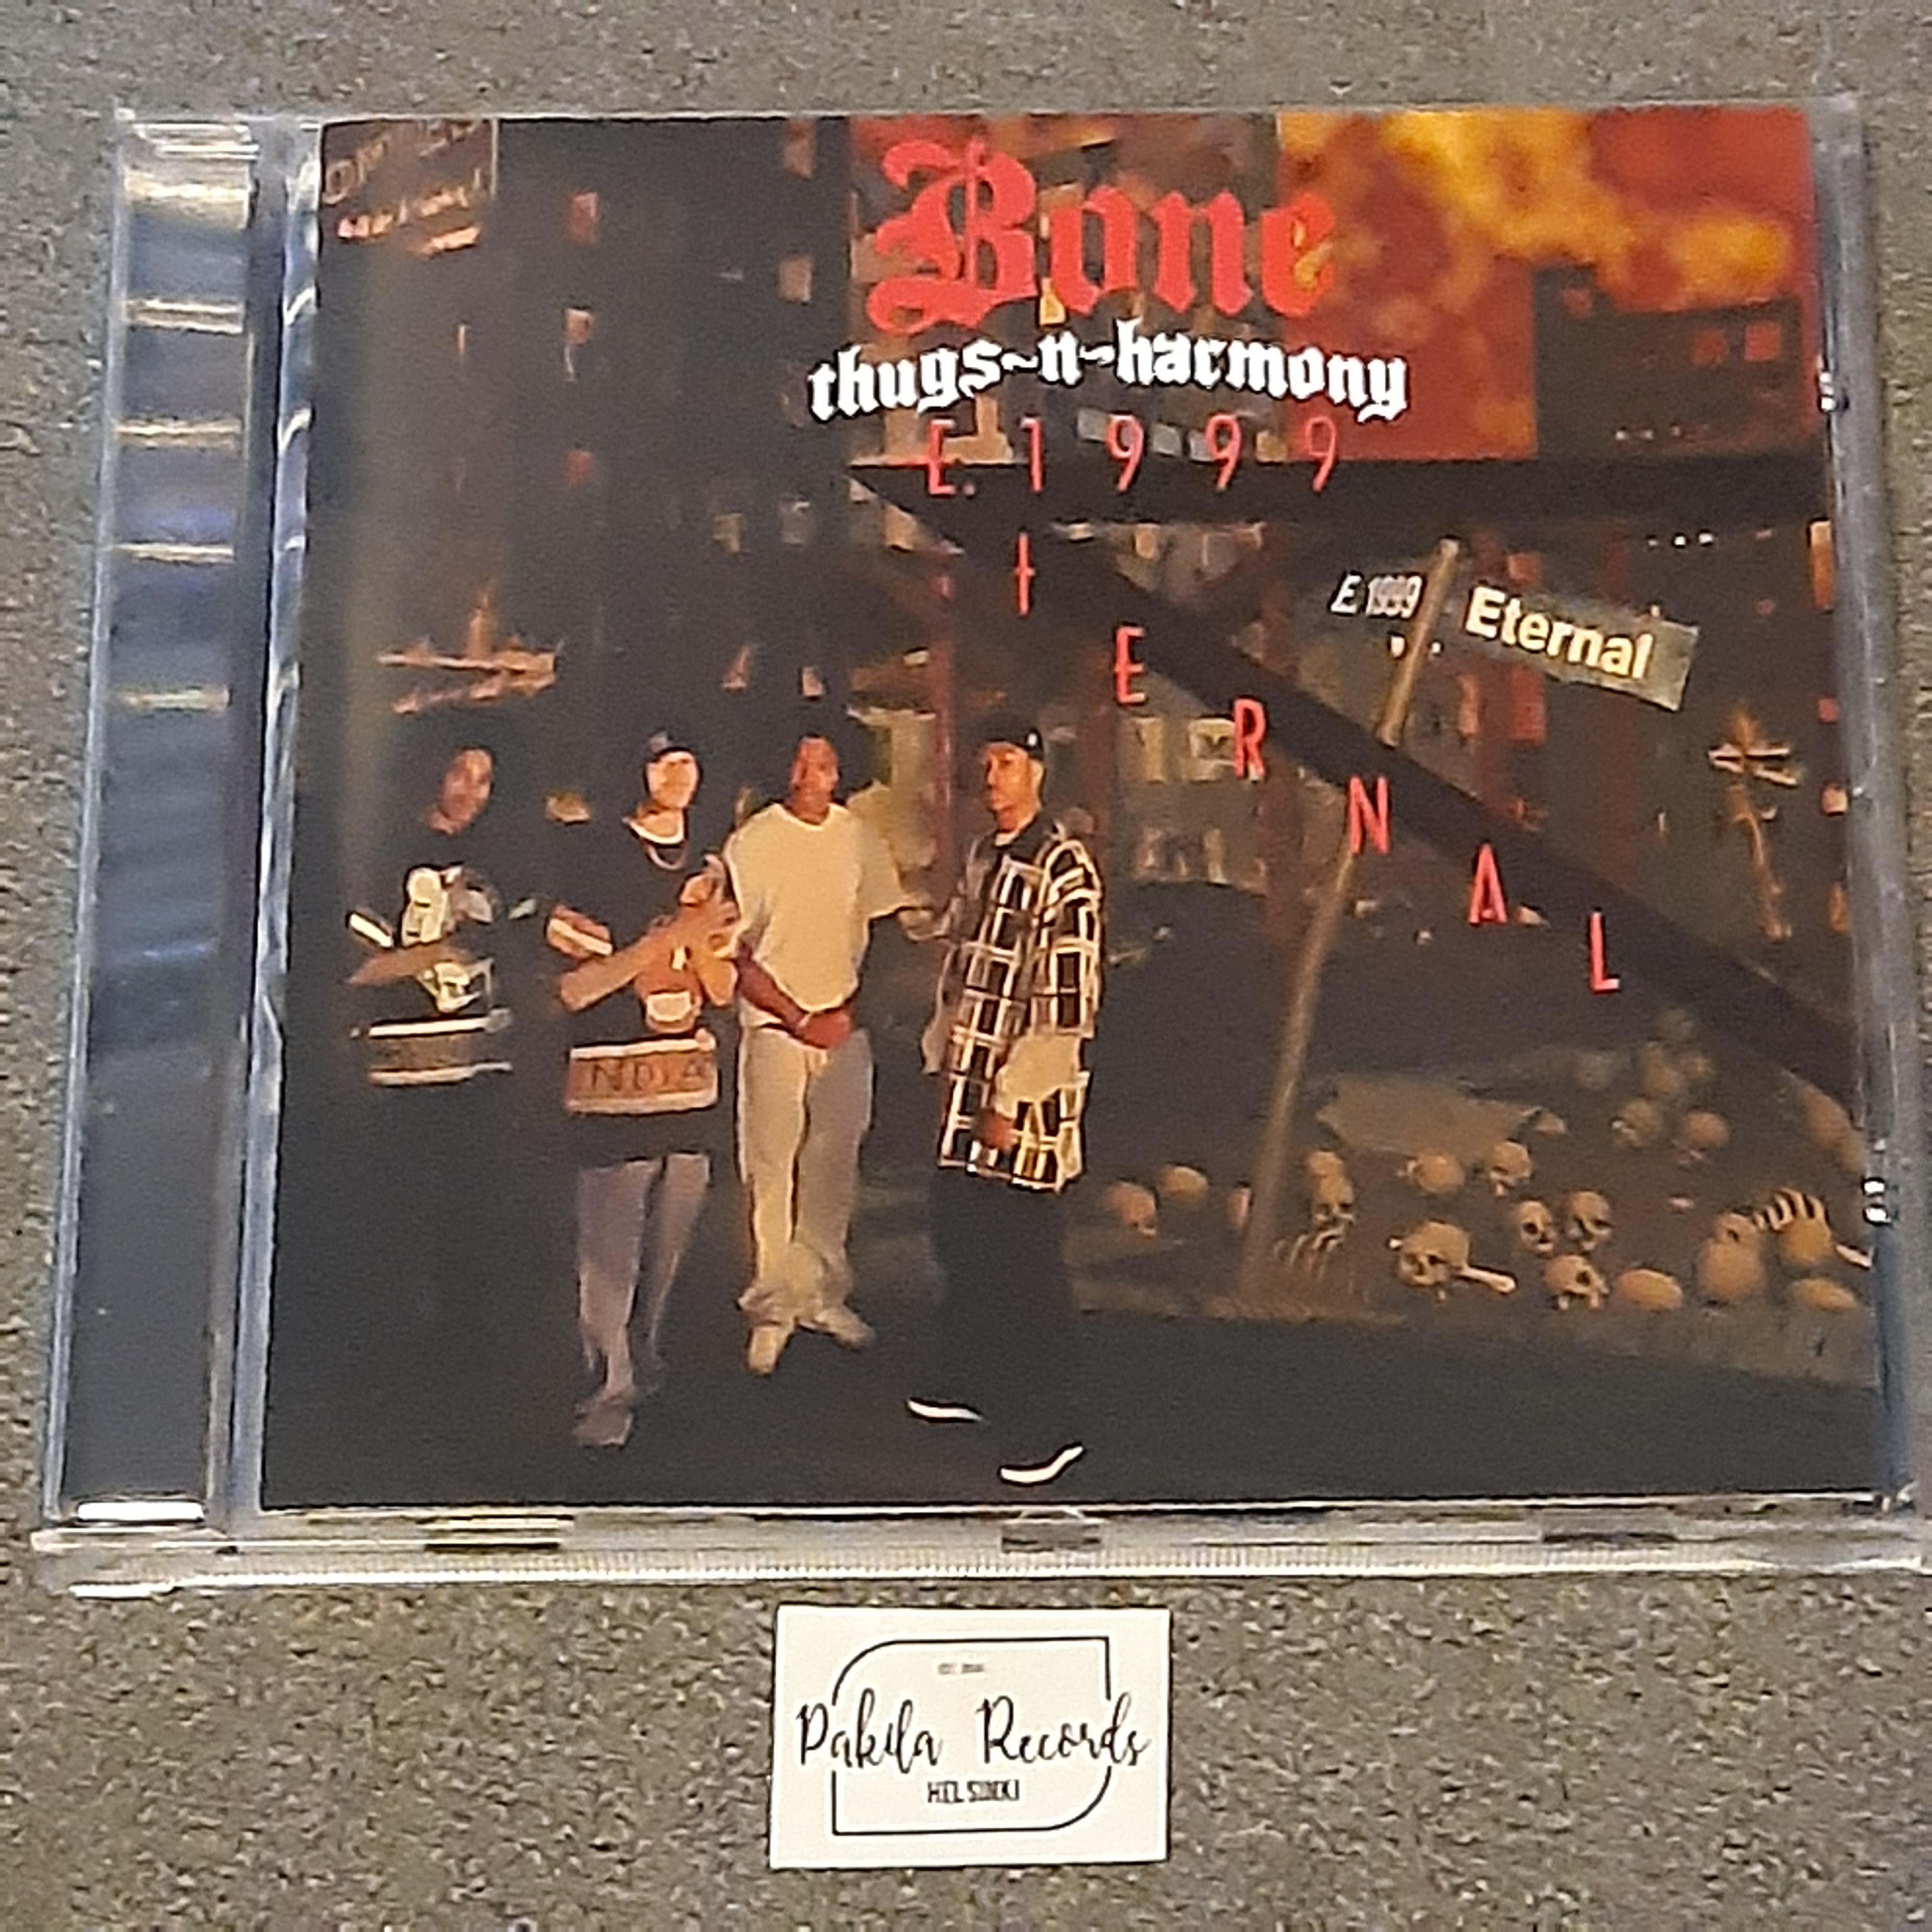 Bone Thugs-N-Harmony - E. 1999 Eternal - CD (käytetty)